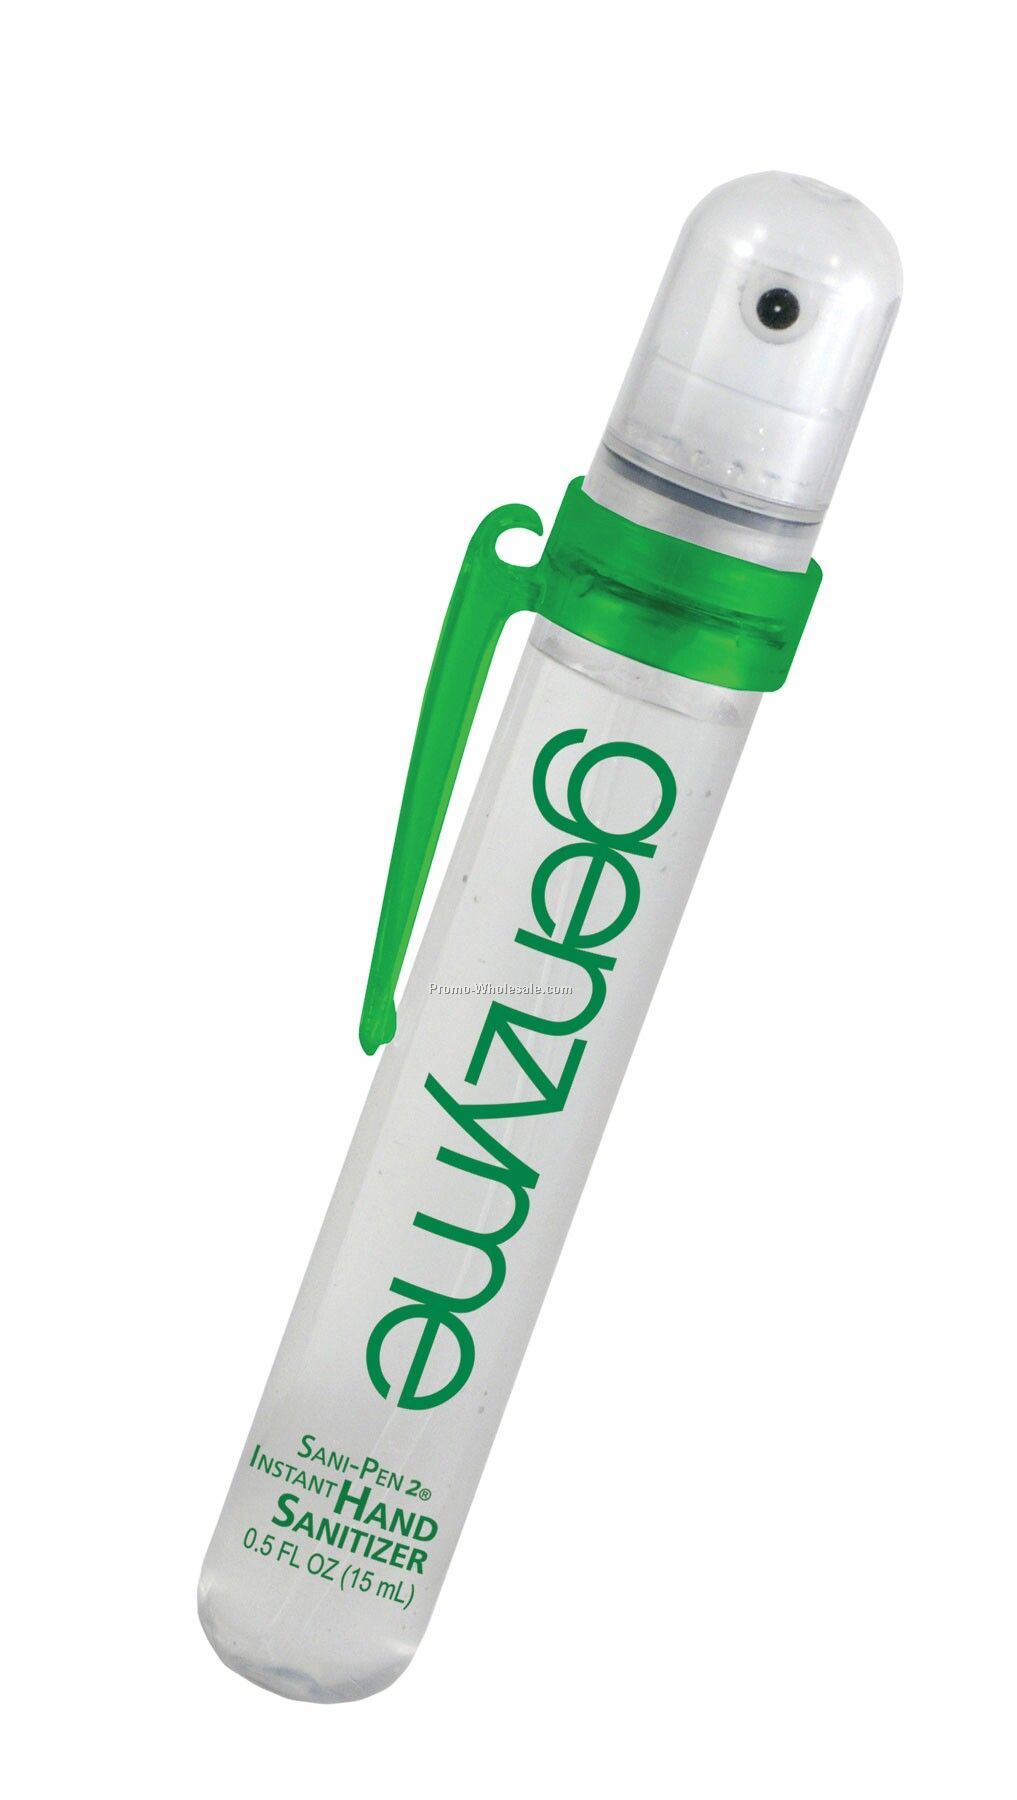 Sani-pen 2 Instant Hand Sanitizer Spray Alcohol-free W/ Combo Clip